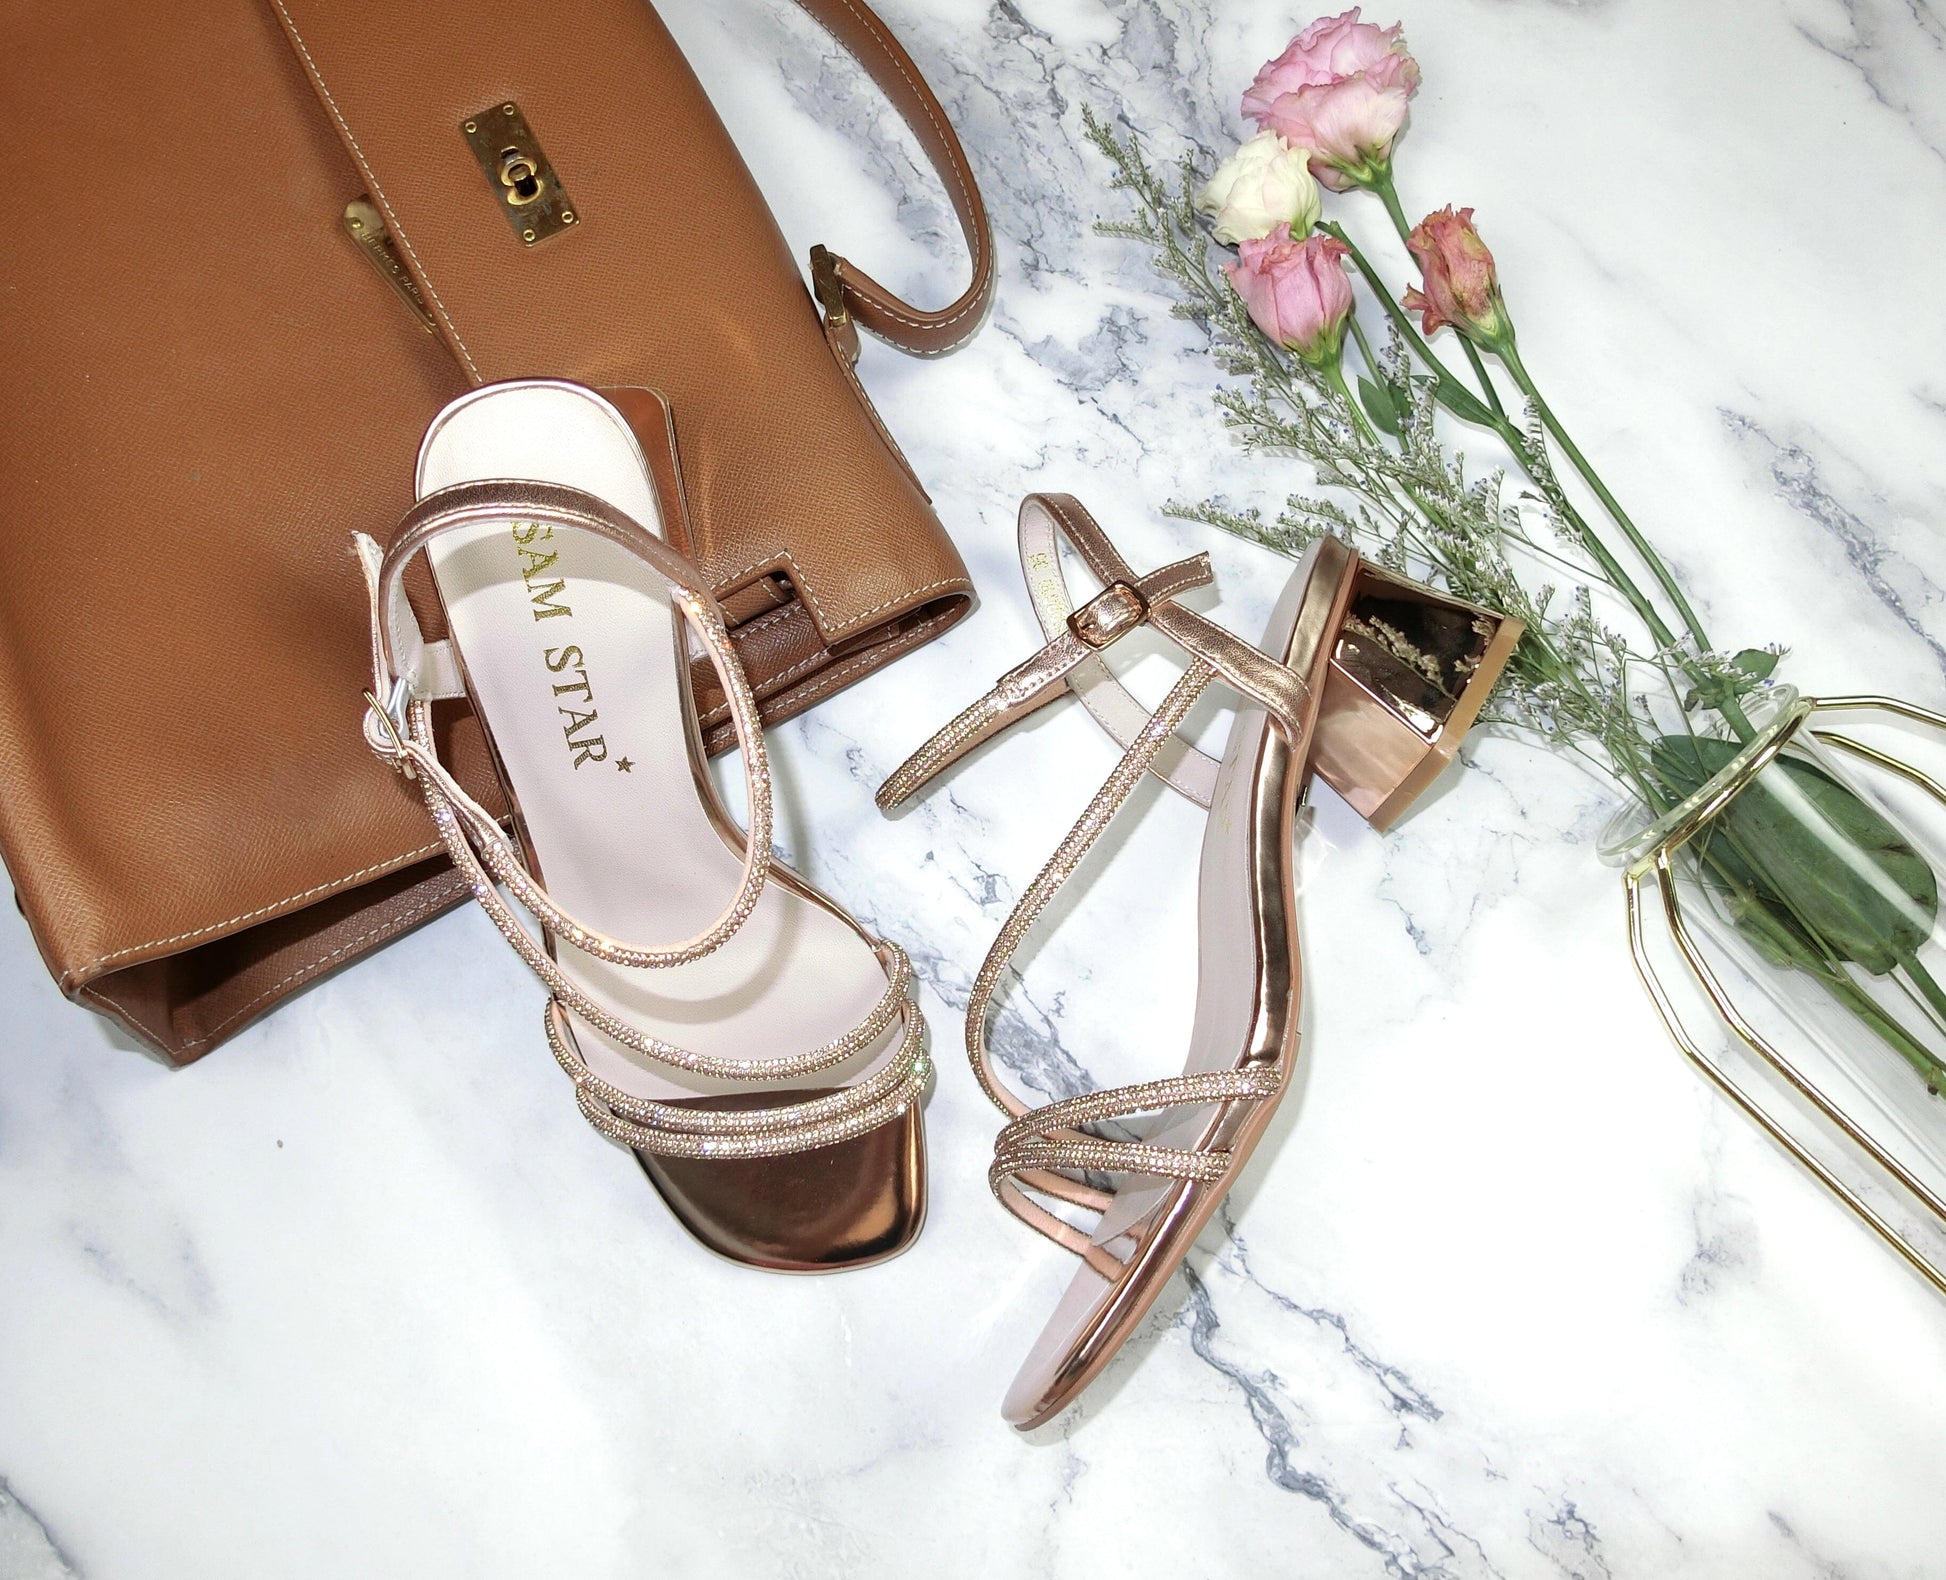 SS22010 Leather strappy rhinestone-embellished block heel sandals in Rosegold sandals Sam Star Shoes Rosegold 39/6 